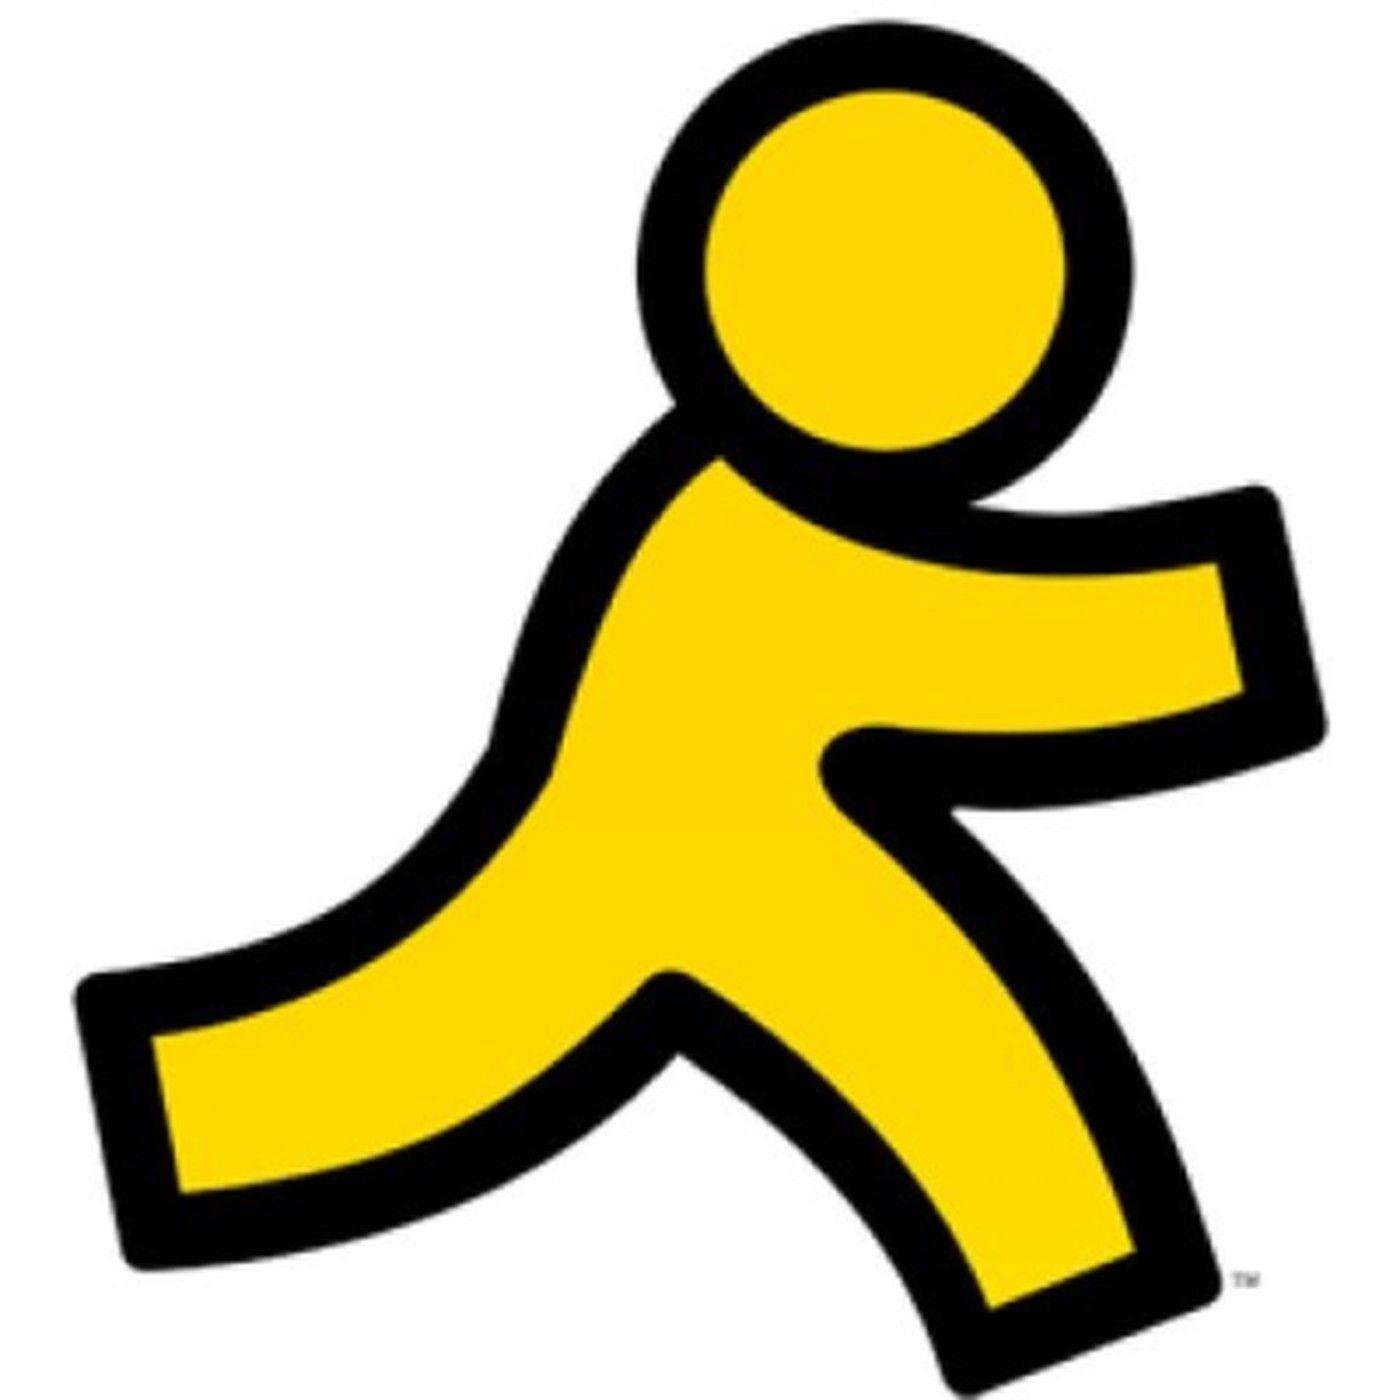 AOL Running Man Logo - AOL Instant Messenger developer team laid off, reports NYT